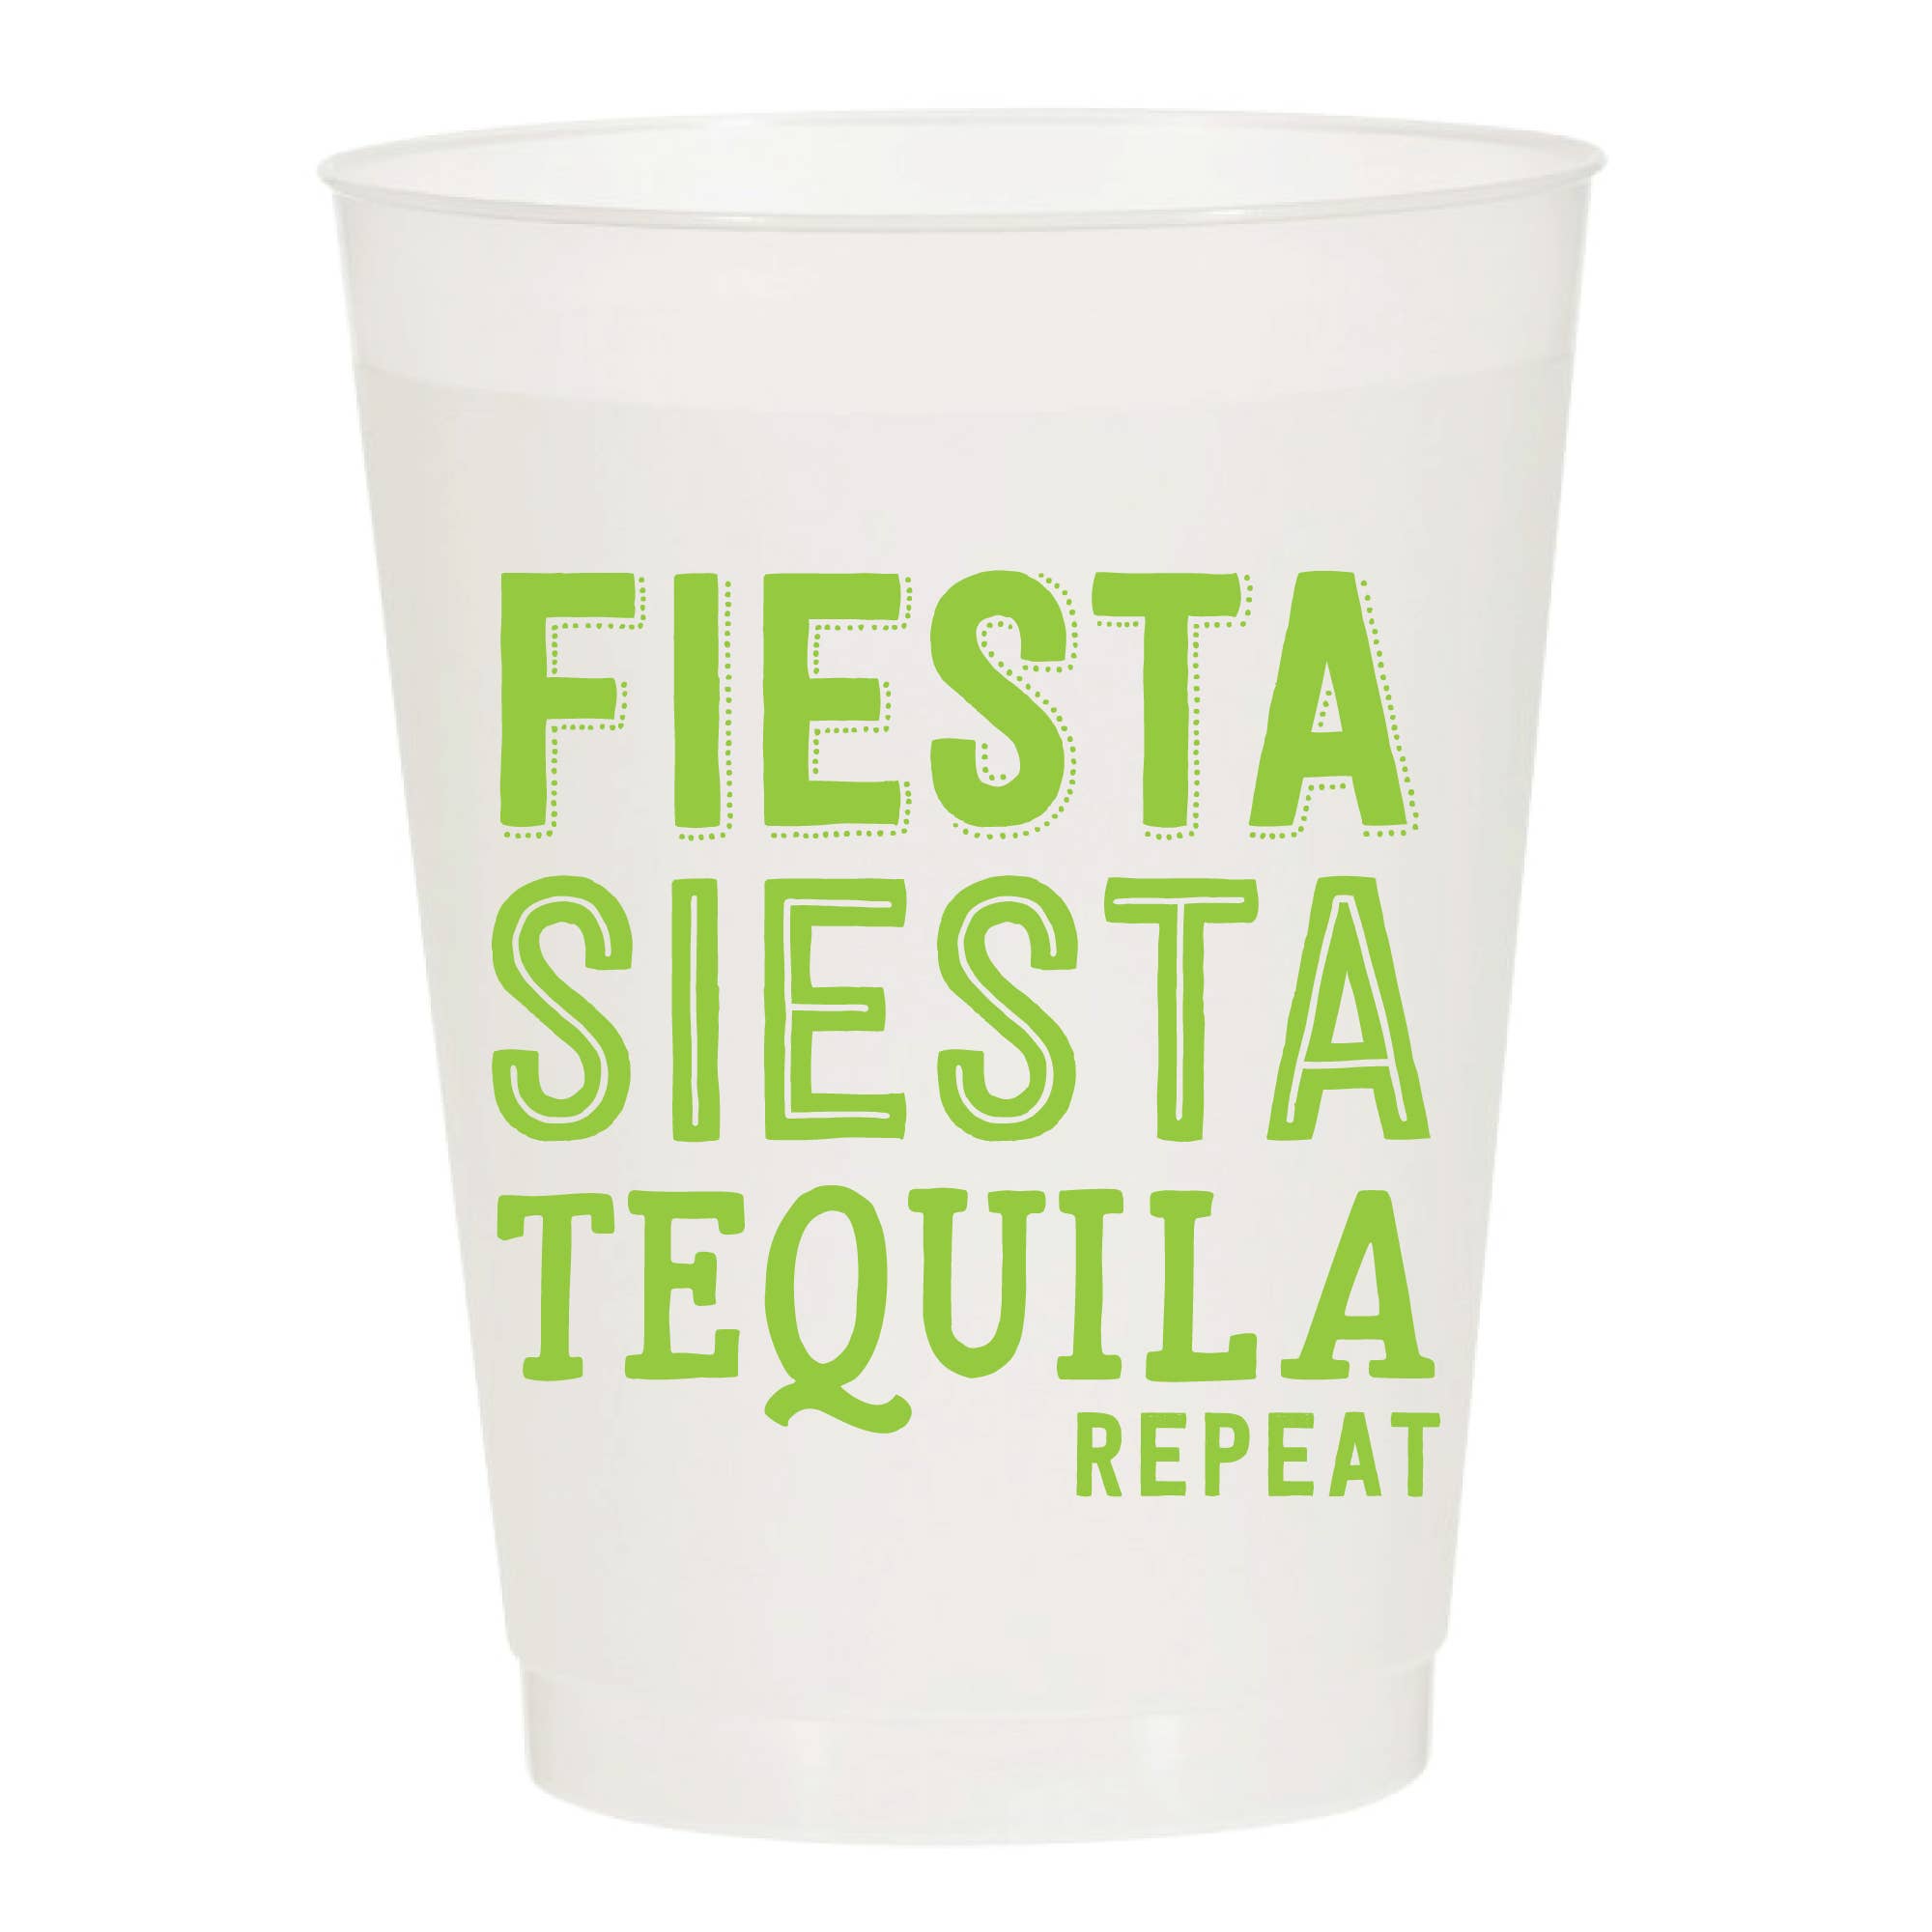 Fiesta Siesta Tequila Plastic Tumbler Cups